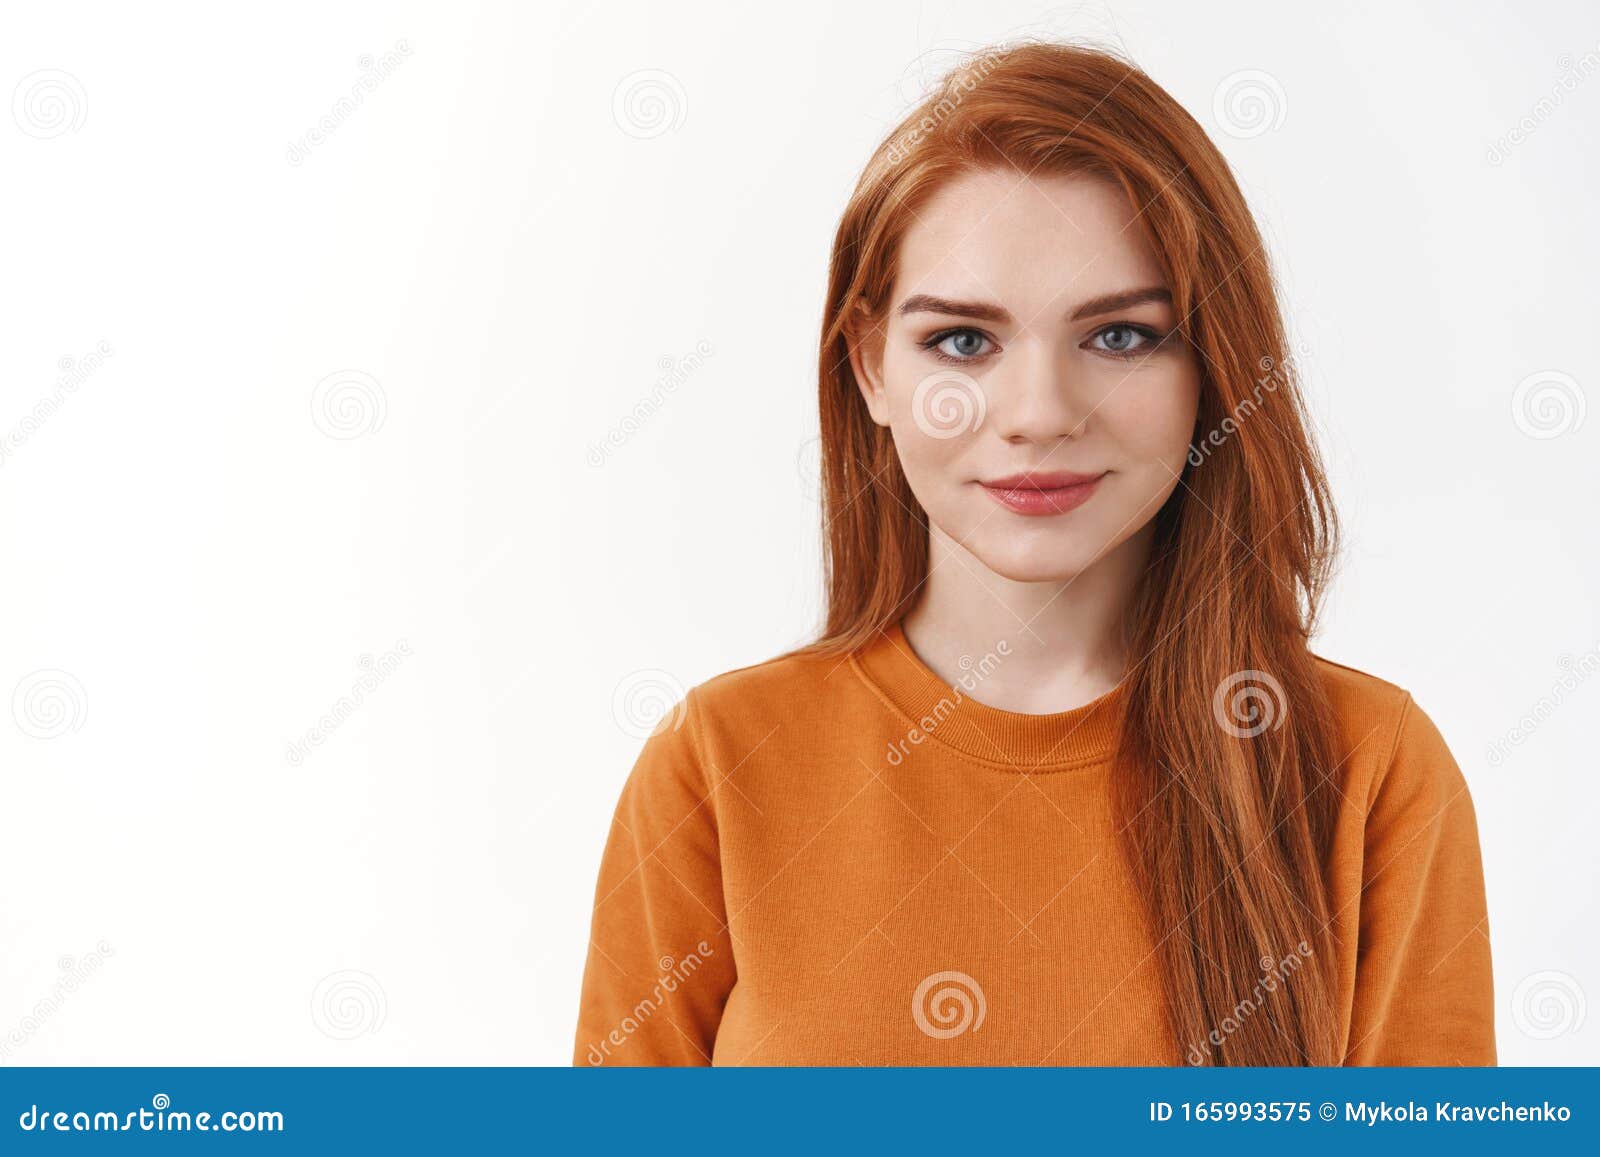 cute redhead wearing orange